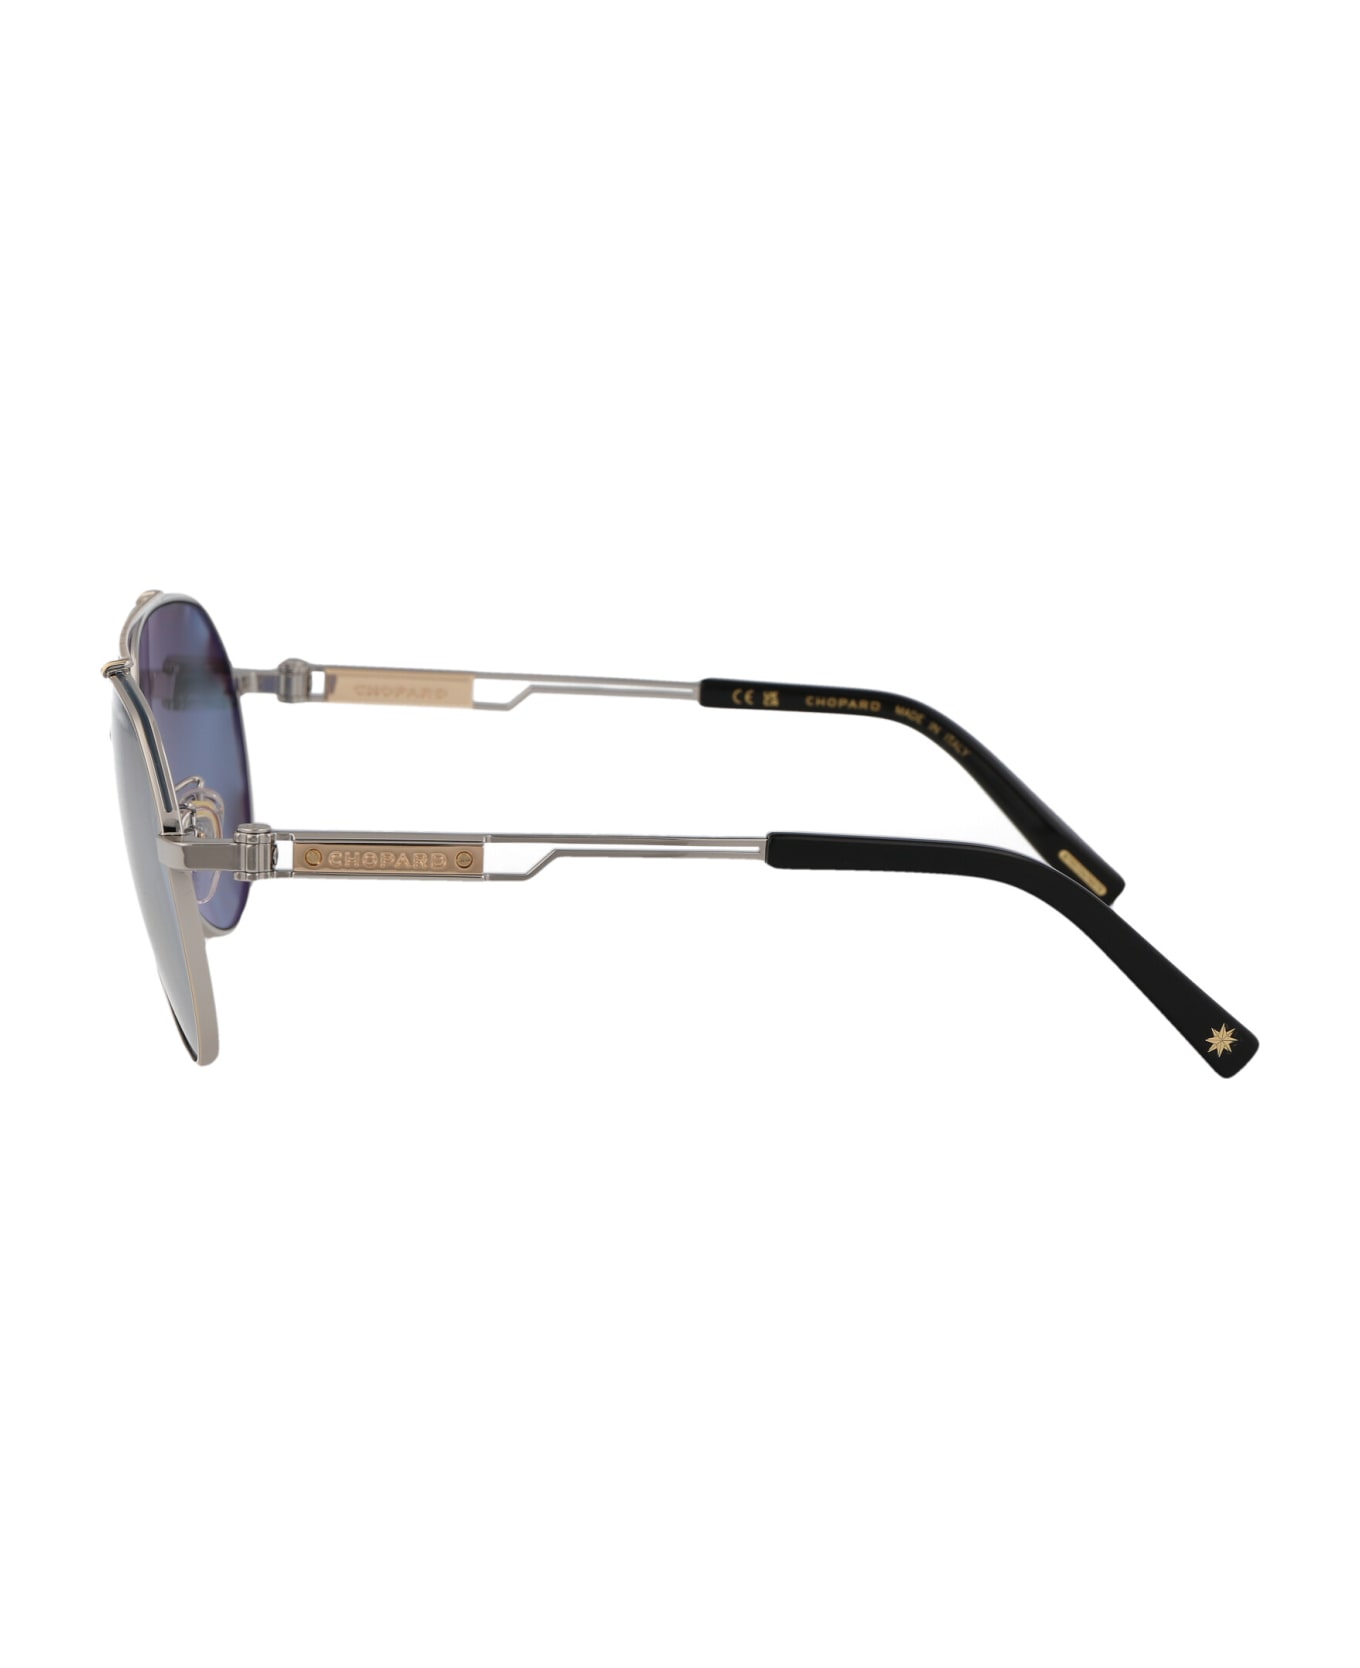 Chopard Schg63 Sunglasses - 340P GOLD C/PARTI PALLADIO LUCIDO サングラス